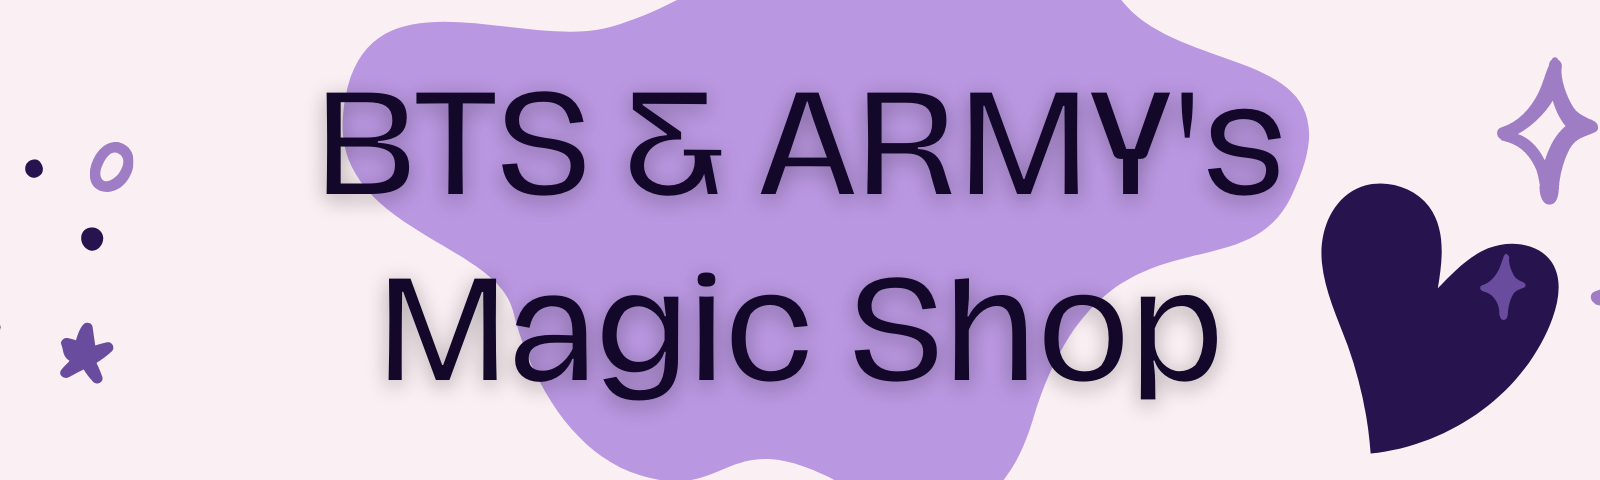 BTS & ARMY’s Magic Shop